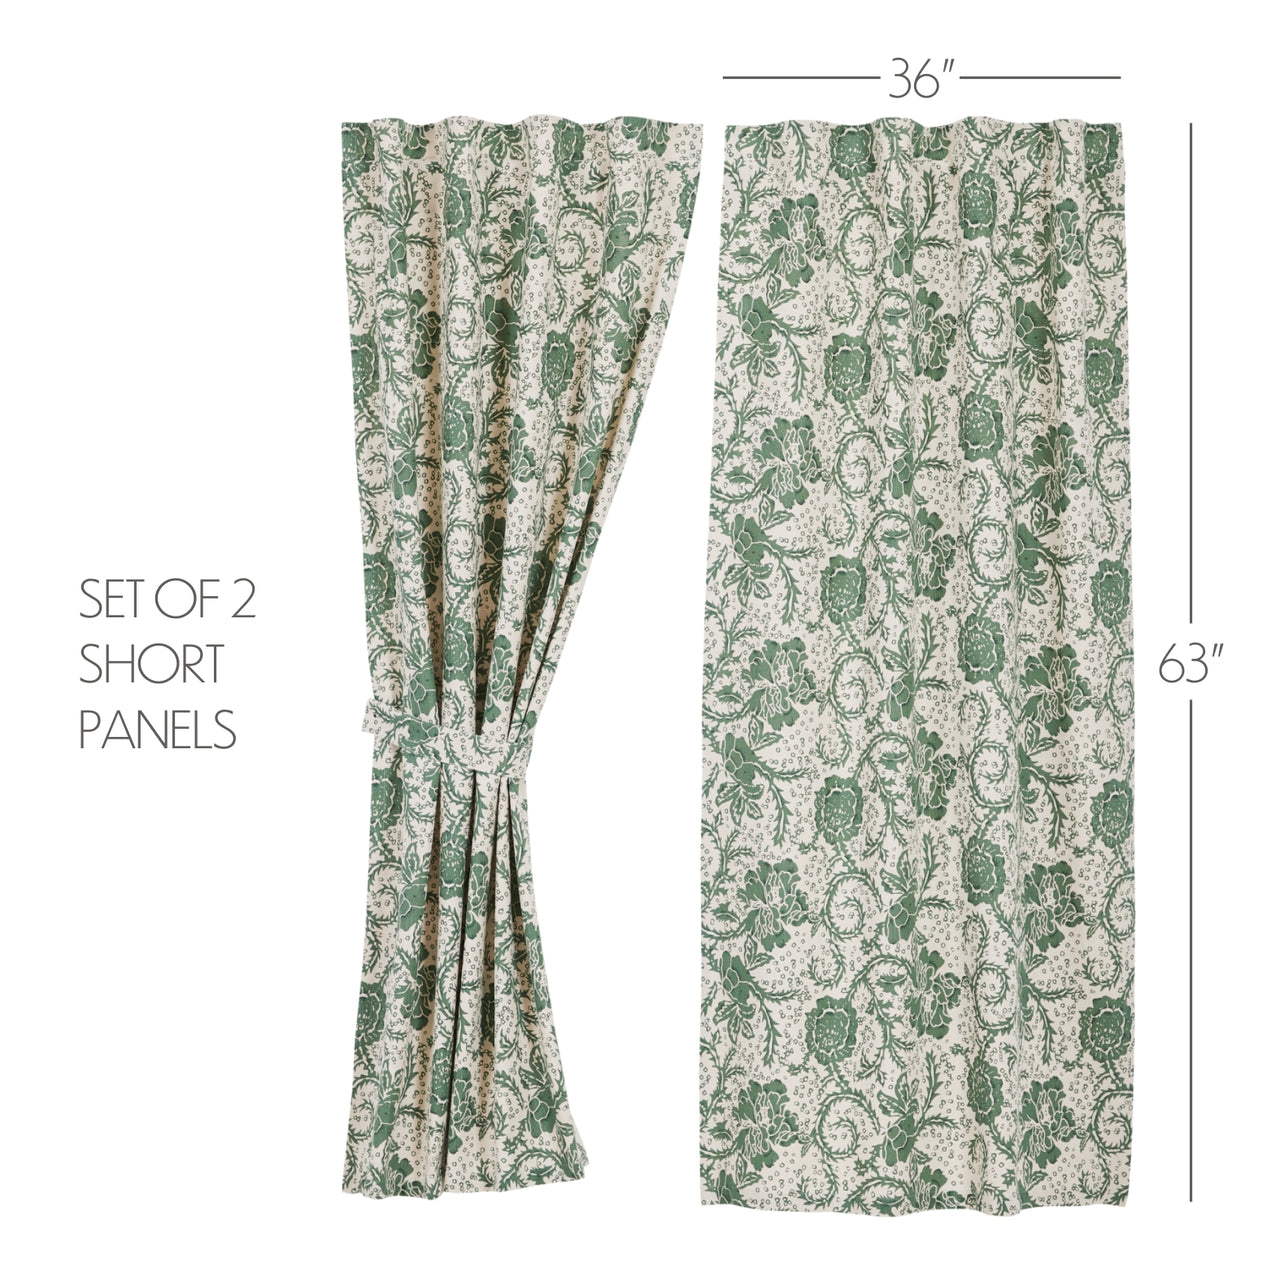 Dorset Green Floral Short Panel Curtain Set of 2 63x36 VHC Brands